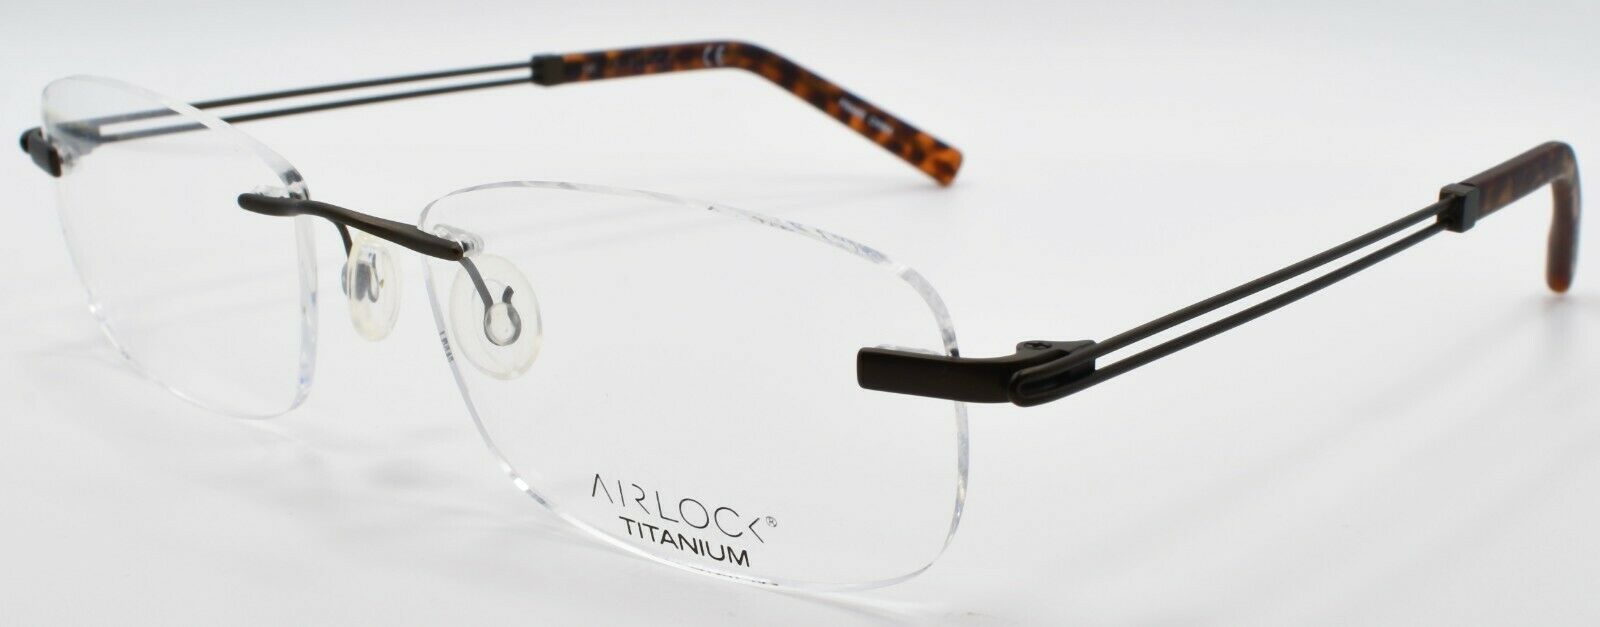 1-Airlock Dignity 203 301 Men's Eyeglasses Frames Rimless 53-18-140 Dark Olive-886895380072-IKSpecs